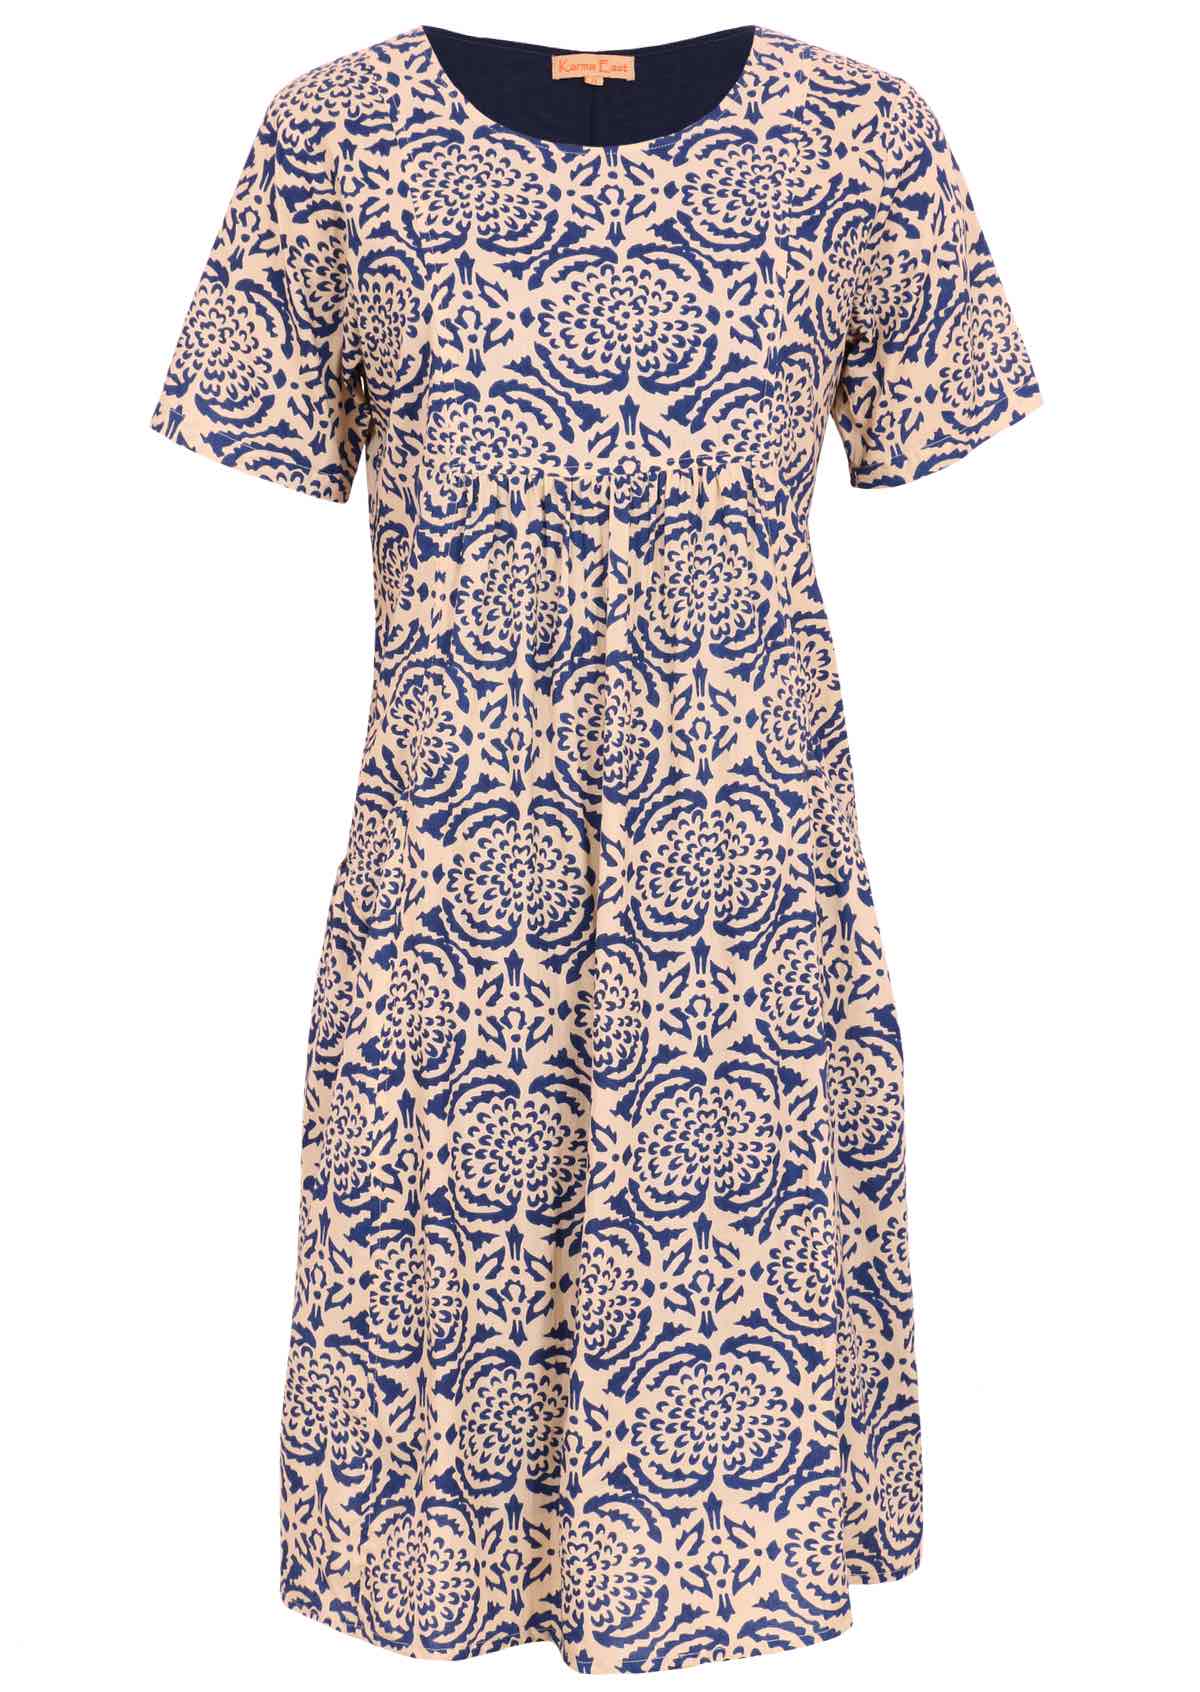 100% cotton dress with a blue dahlia print on a cream base. 